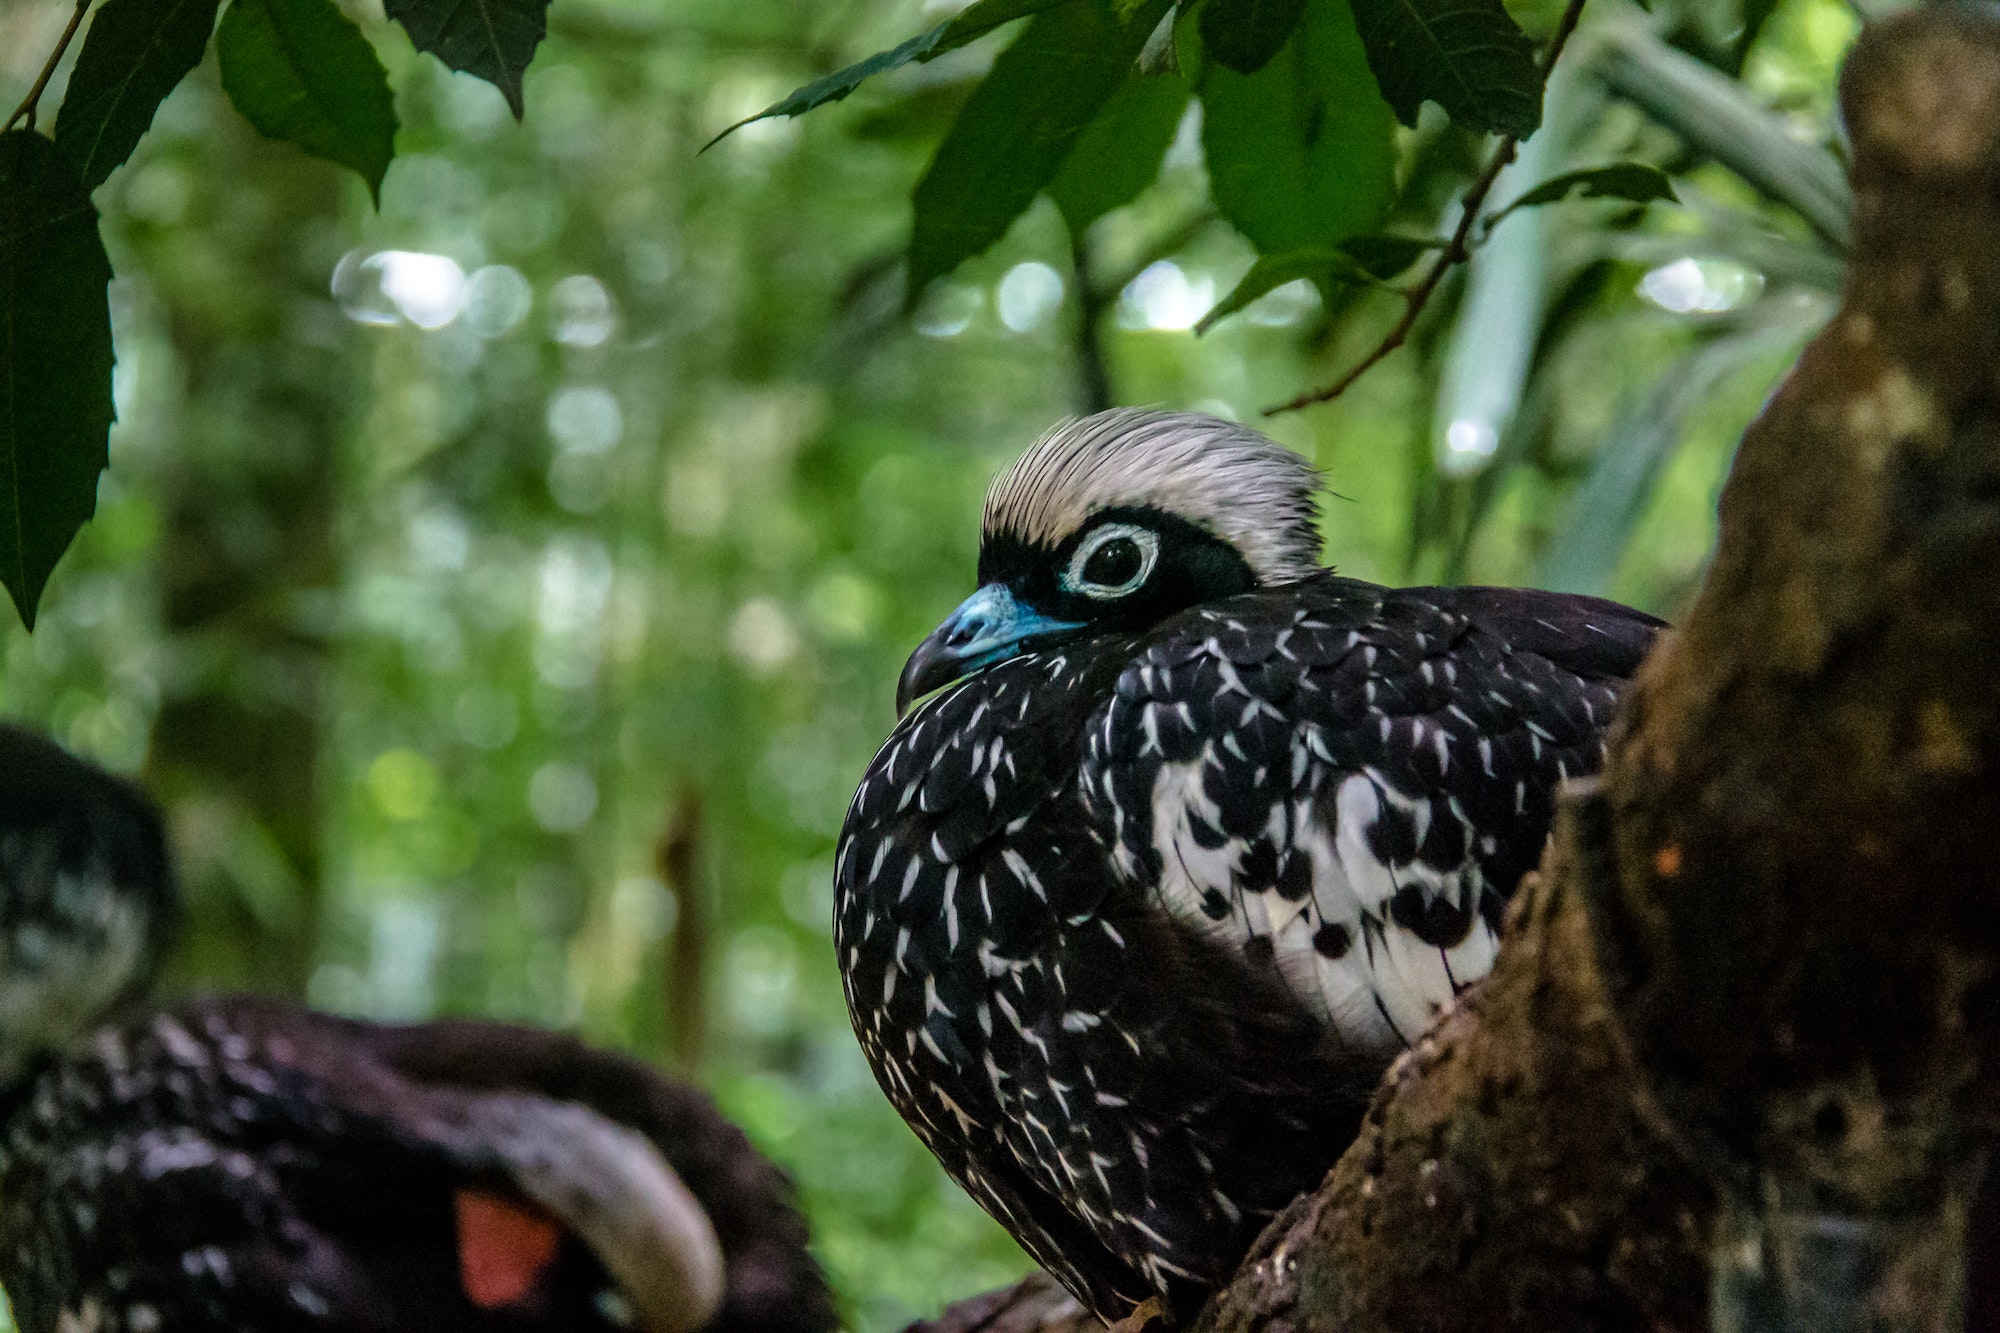 Jacutinga en el Parque das Aves - Foz do Iguacu, Paraná, Brasil